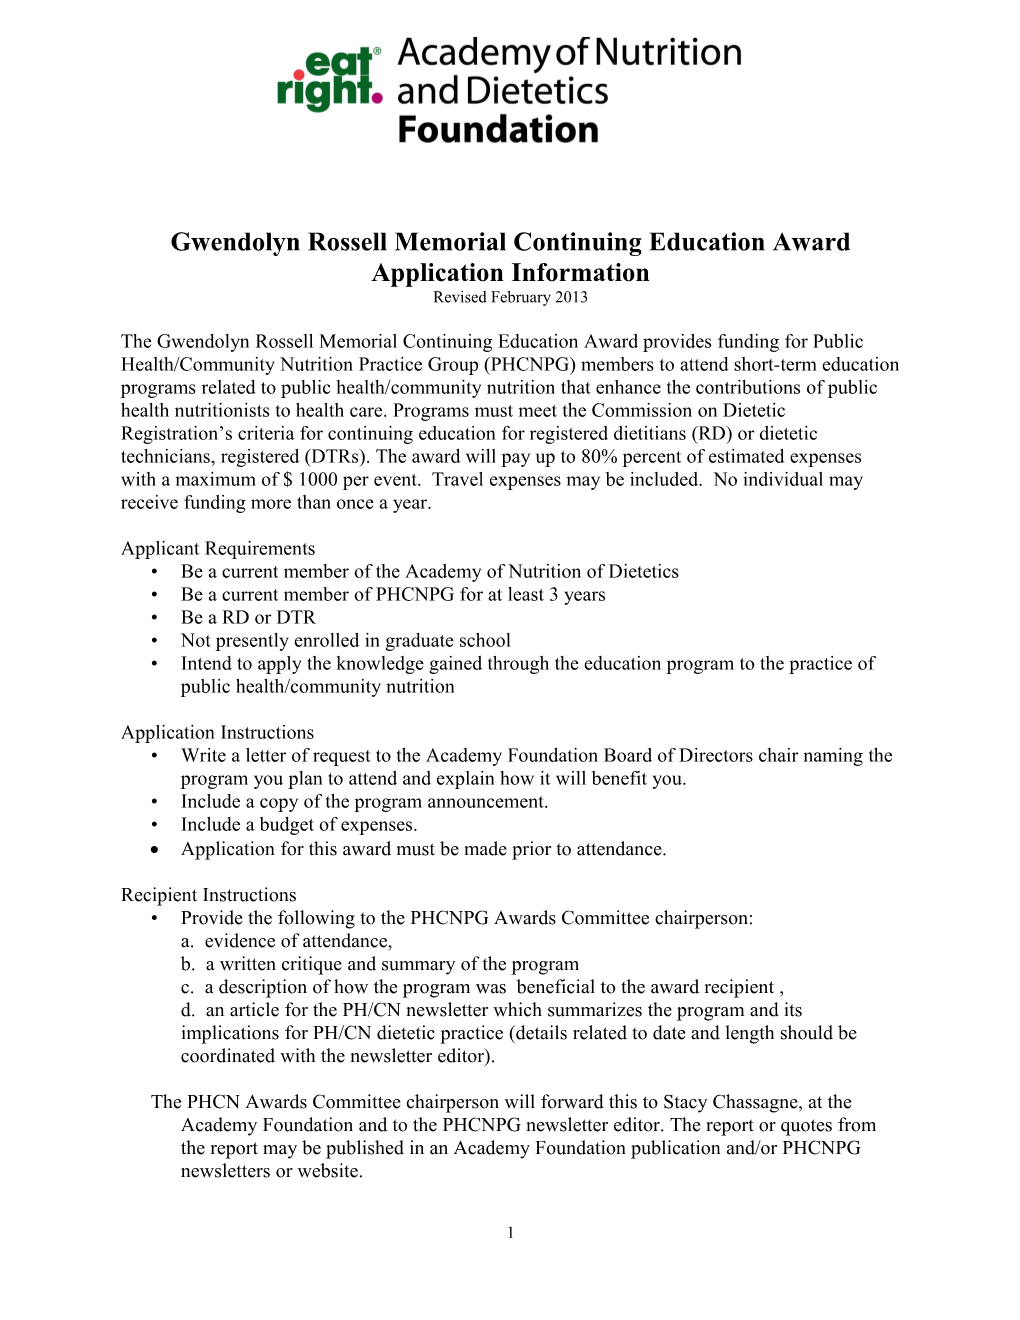 Gwendolyn Rossell Memorial Award Application